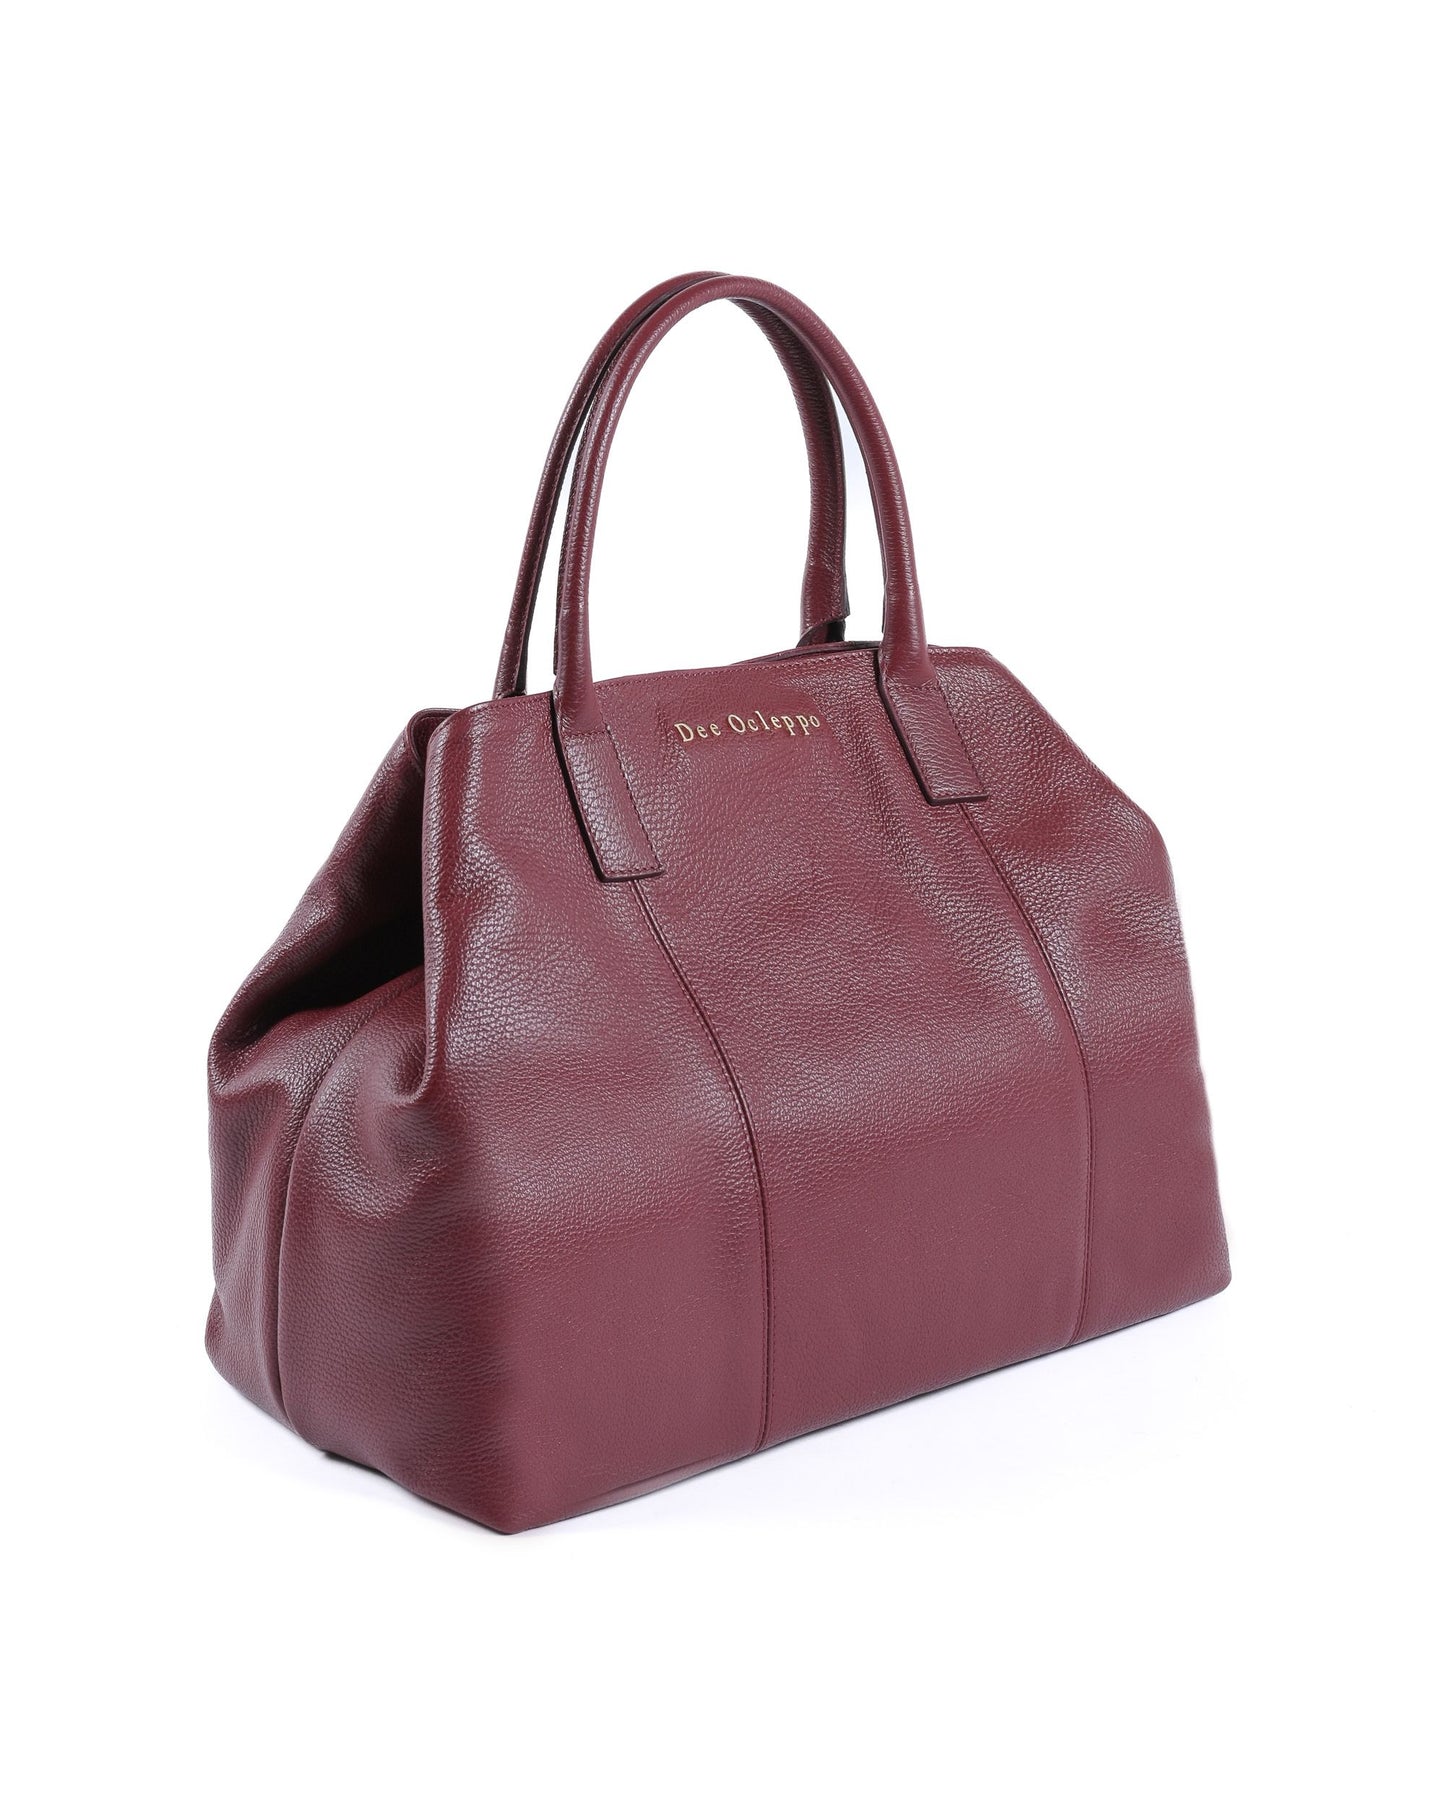 Dee Ocleppo Womens Handbag CORNWALL BORDEAUX